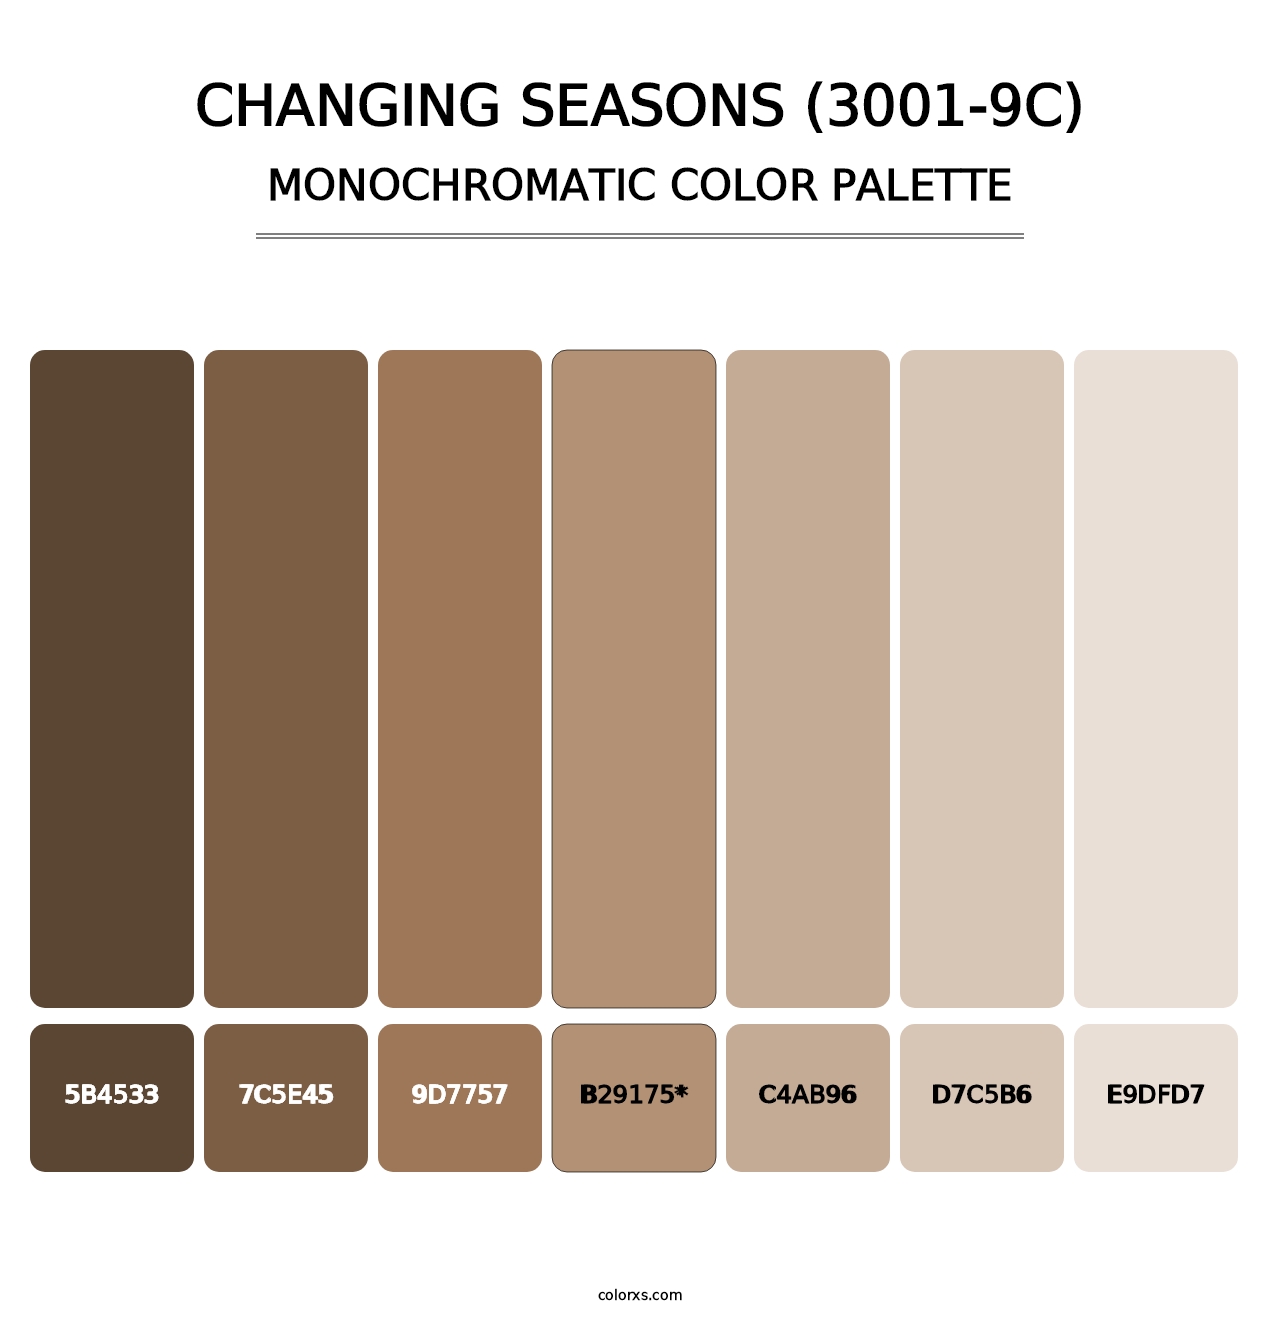 Changing Seasons (3001-9C) - Monochromatic Color Palette